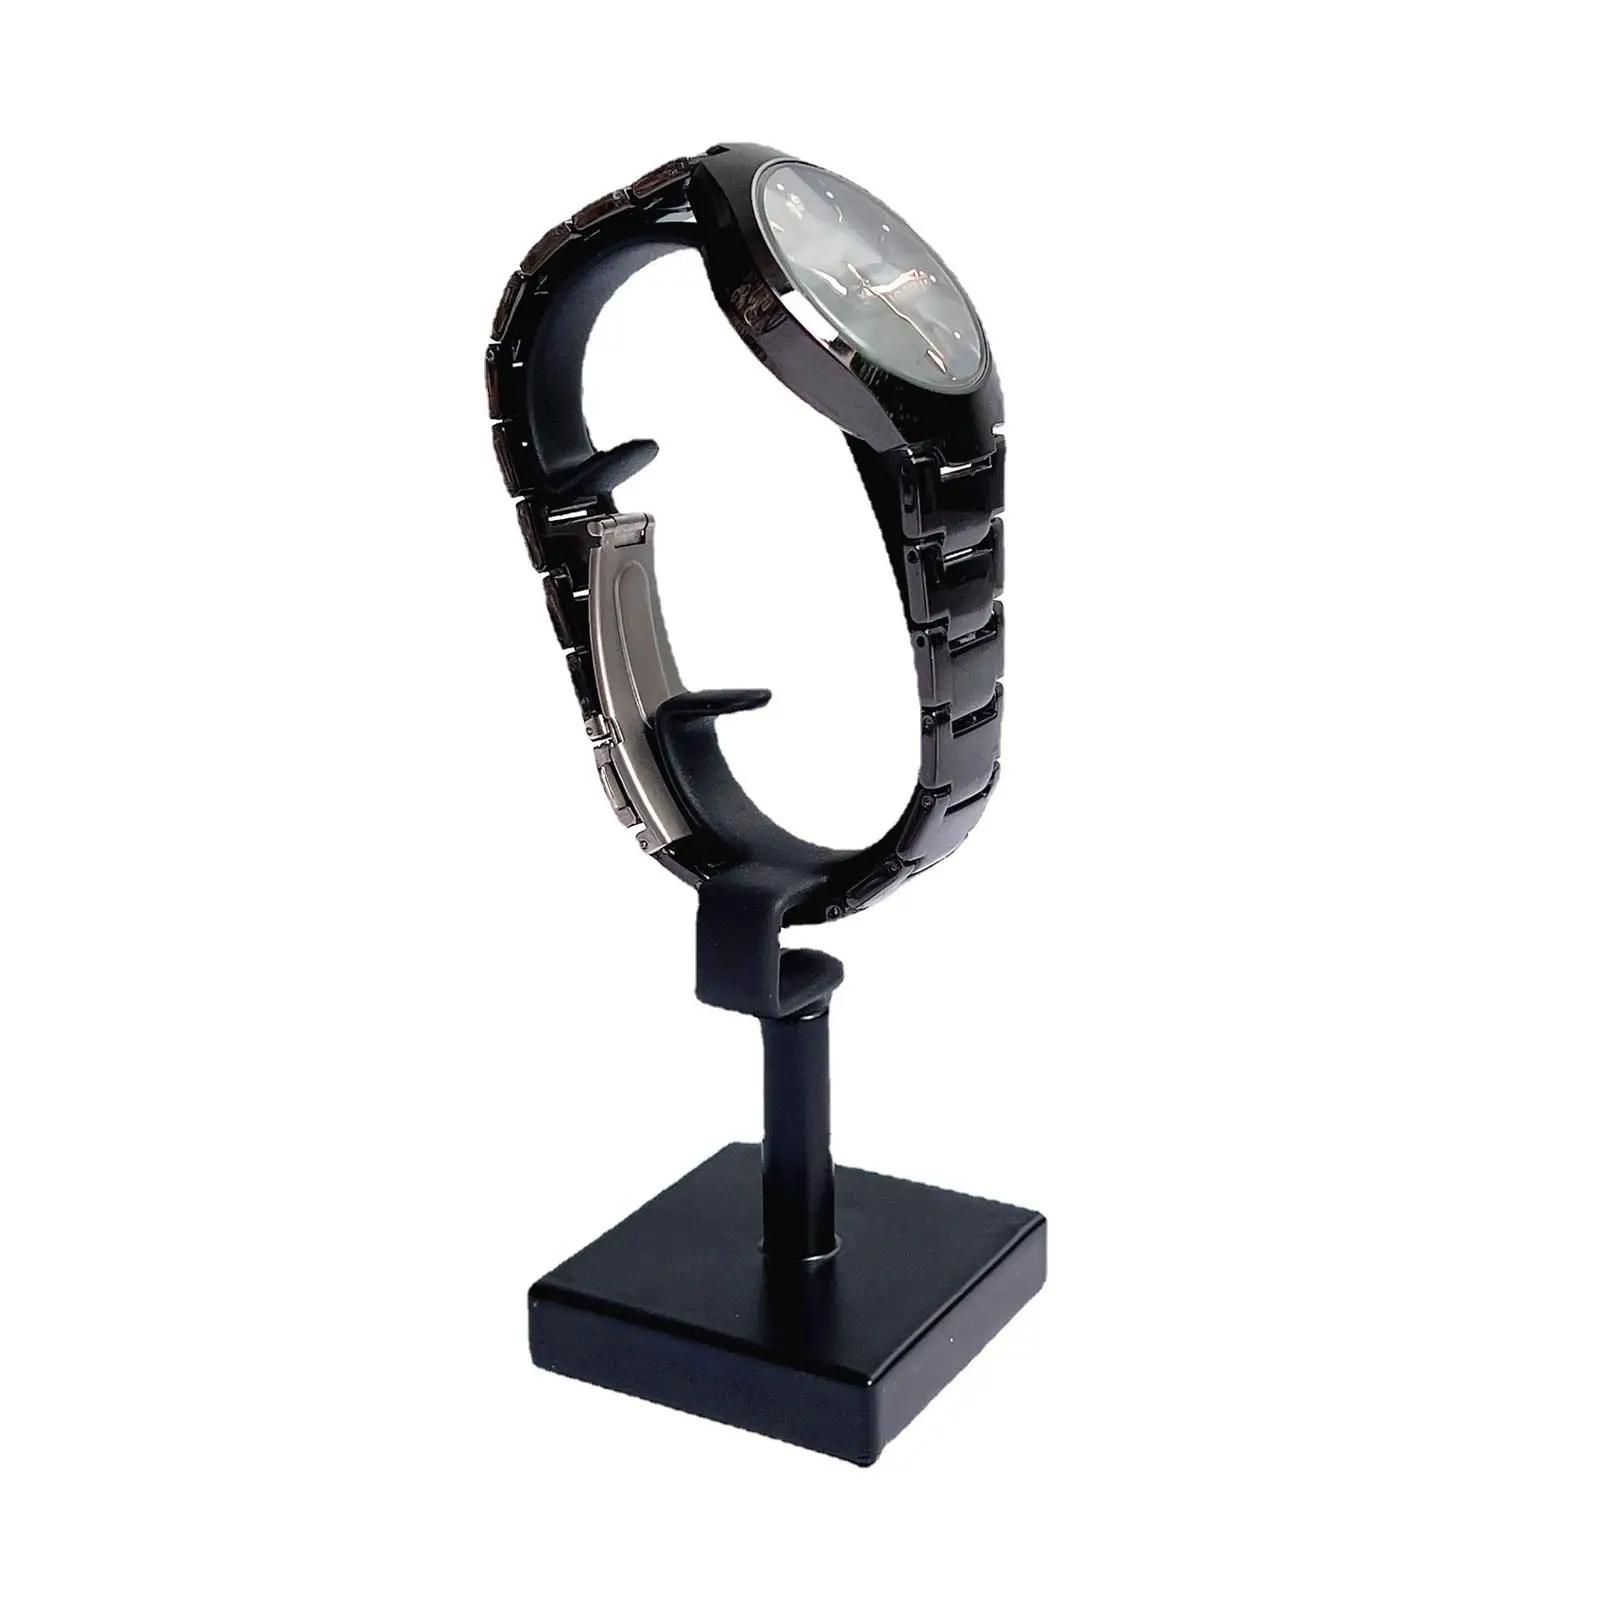 Stable Watch Display Stand Home Decor Freestanding Ornament modern Bracelet Holder for Desktop Showcase Retail Dresser